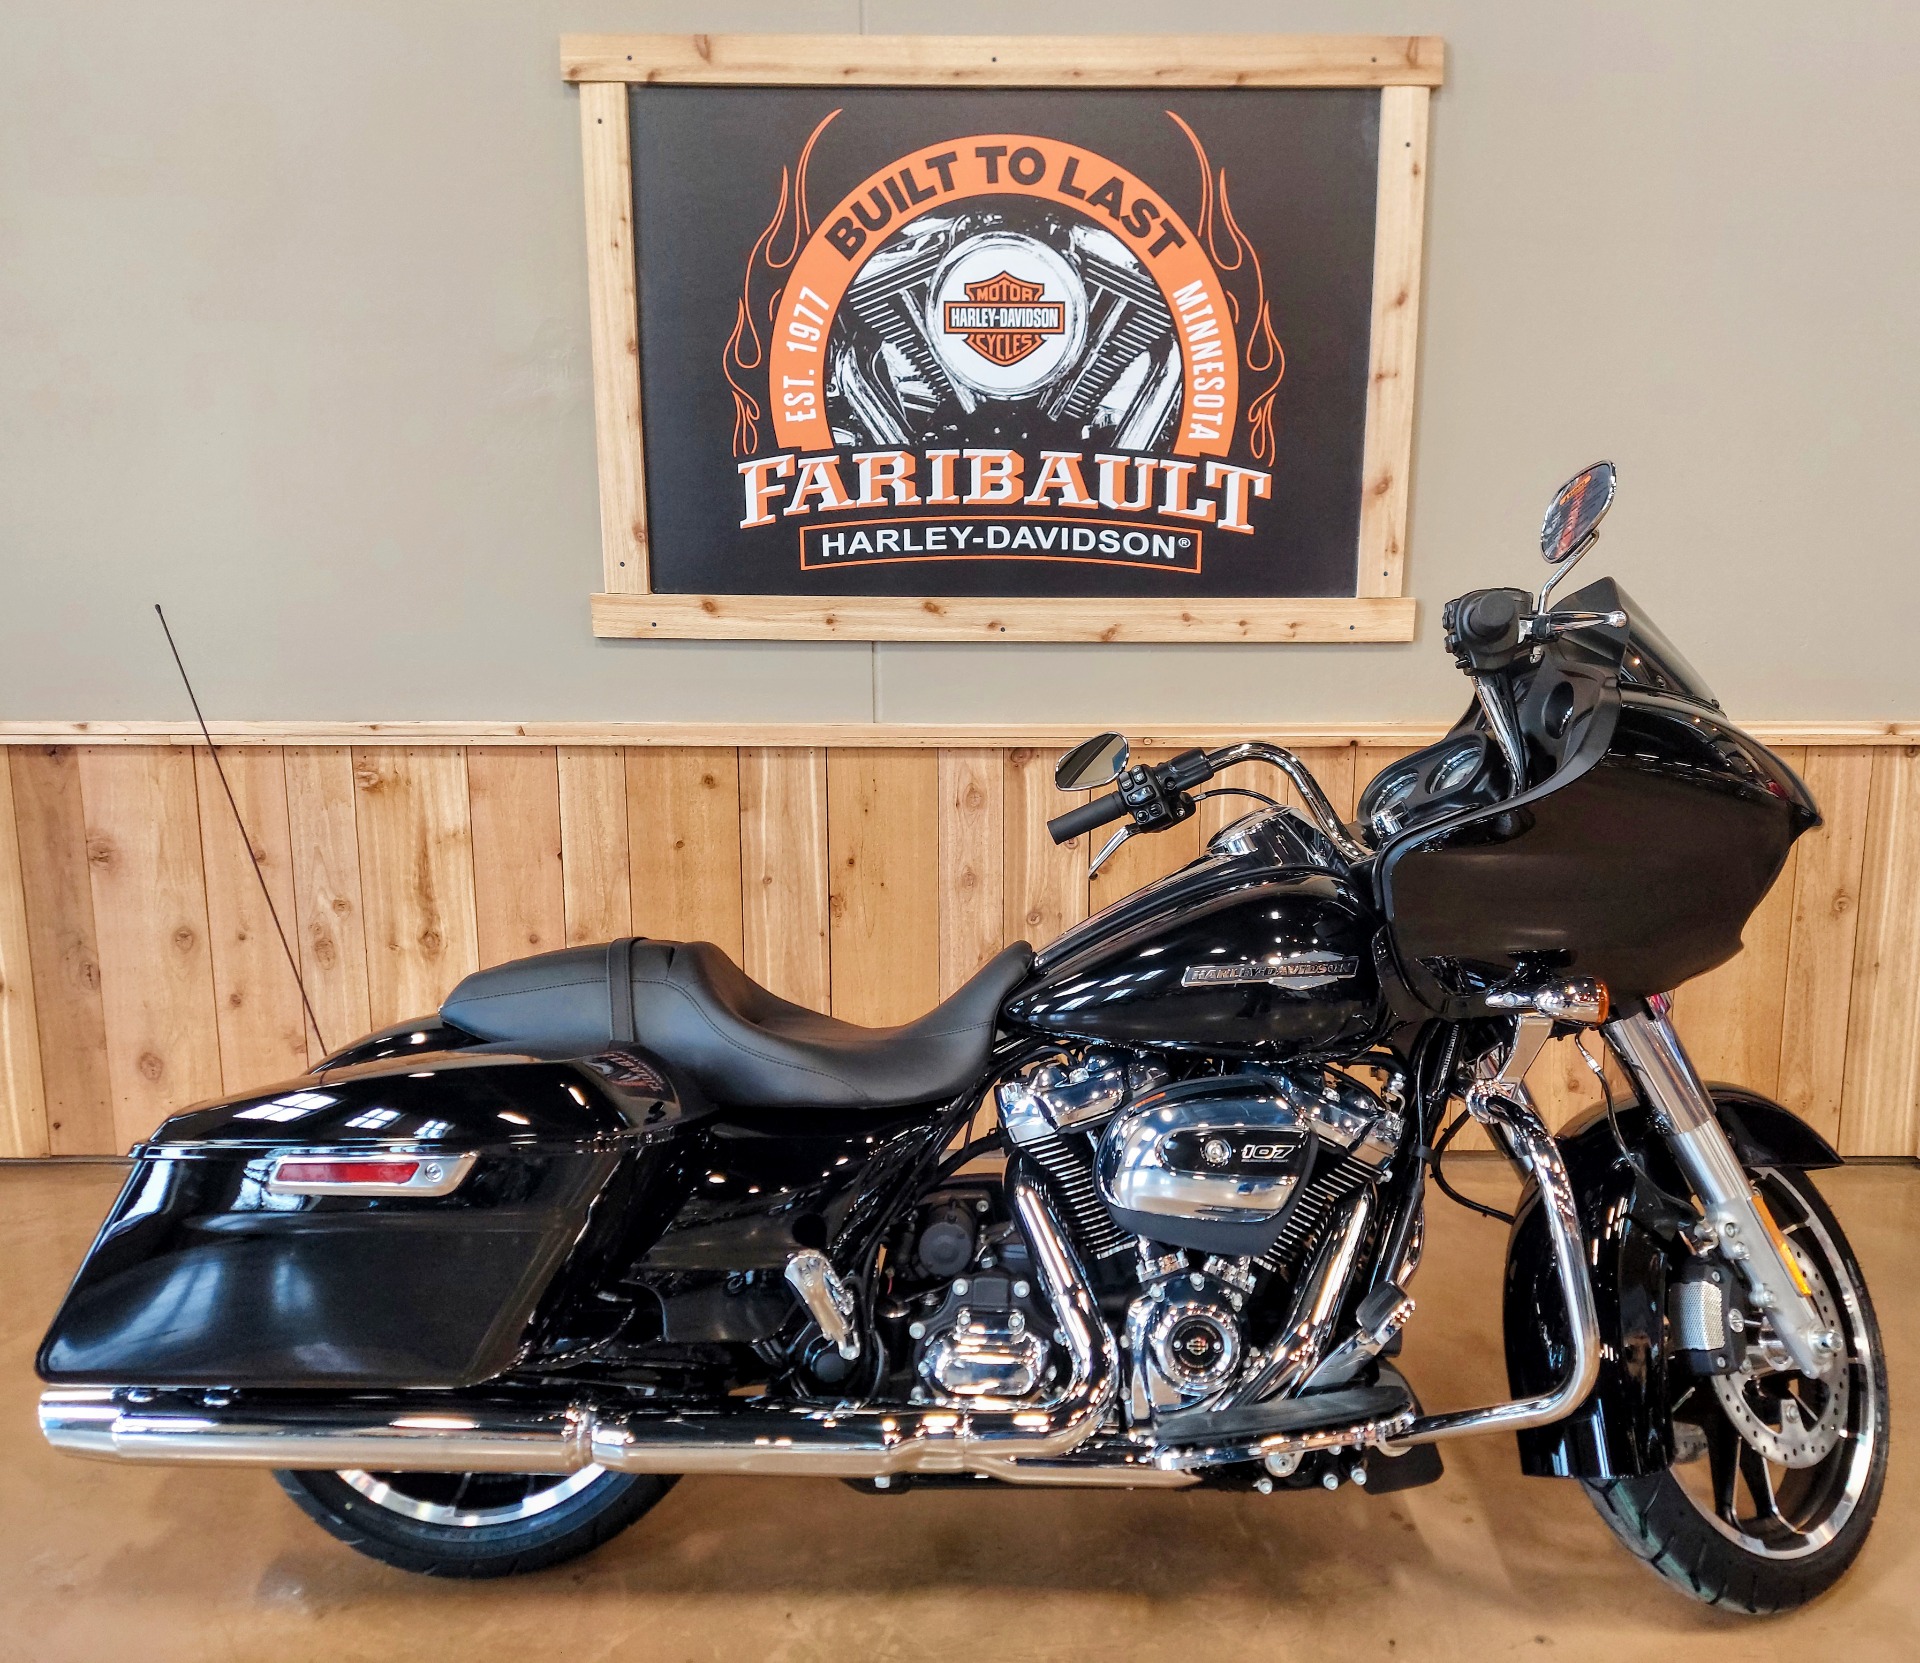 New 2021 Harley Davidson Road Glide Motorcycles In Faribault Mn To624618 Vivid Black